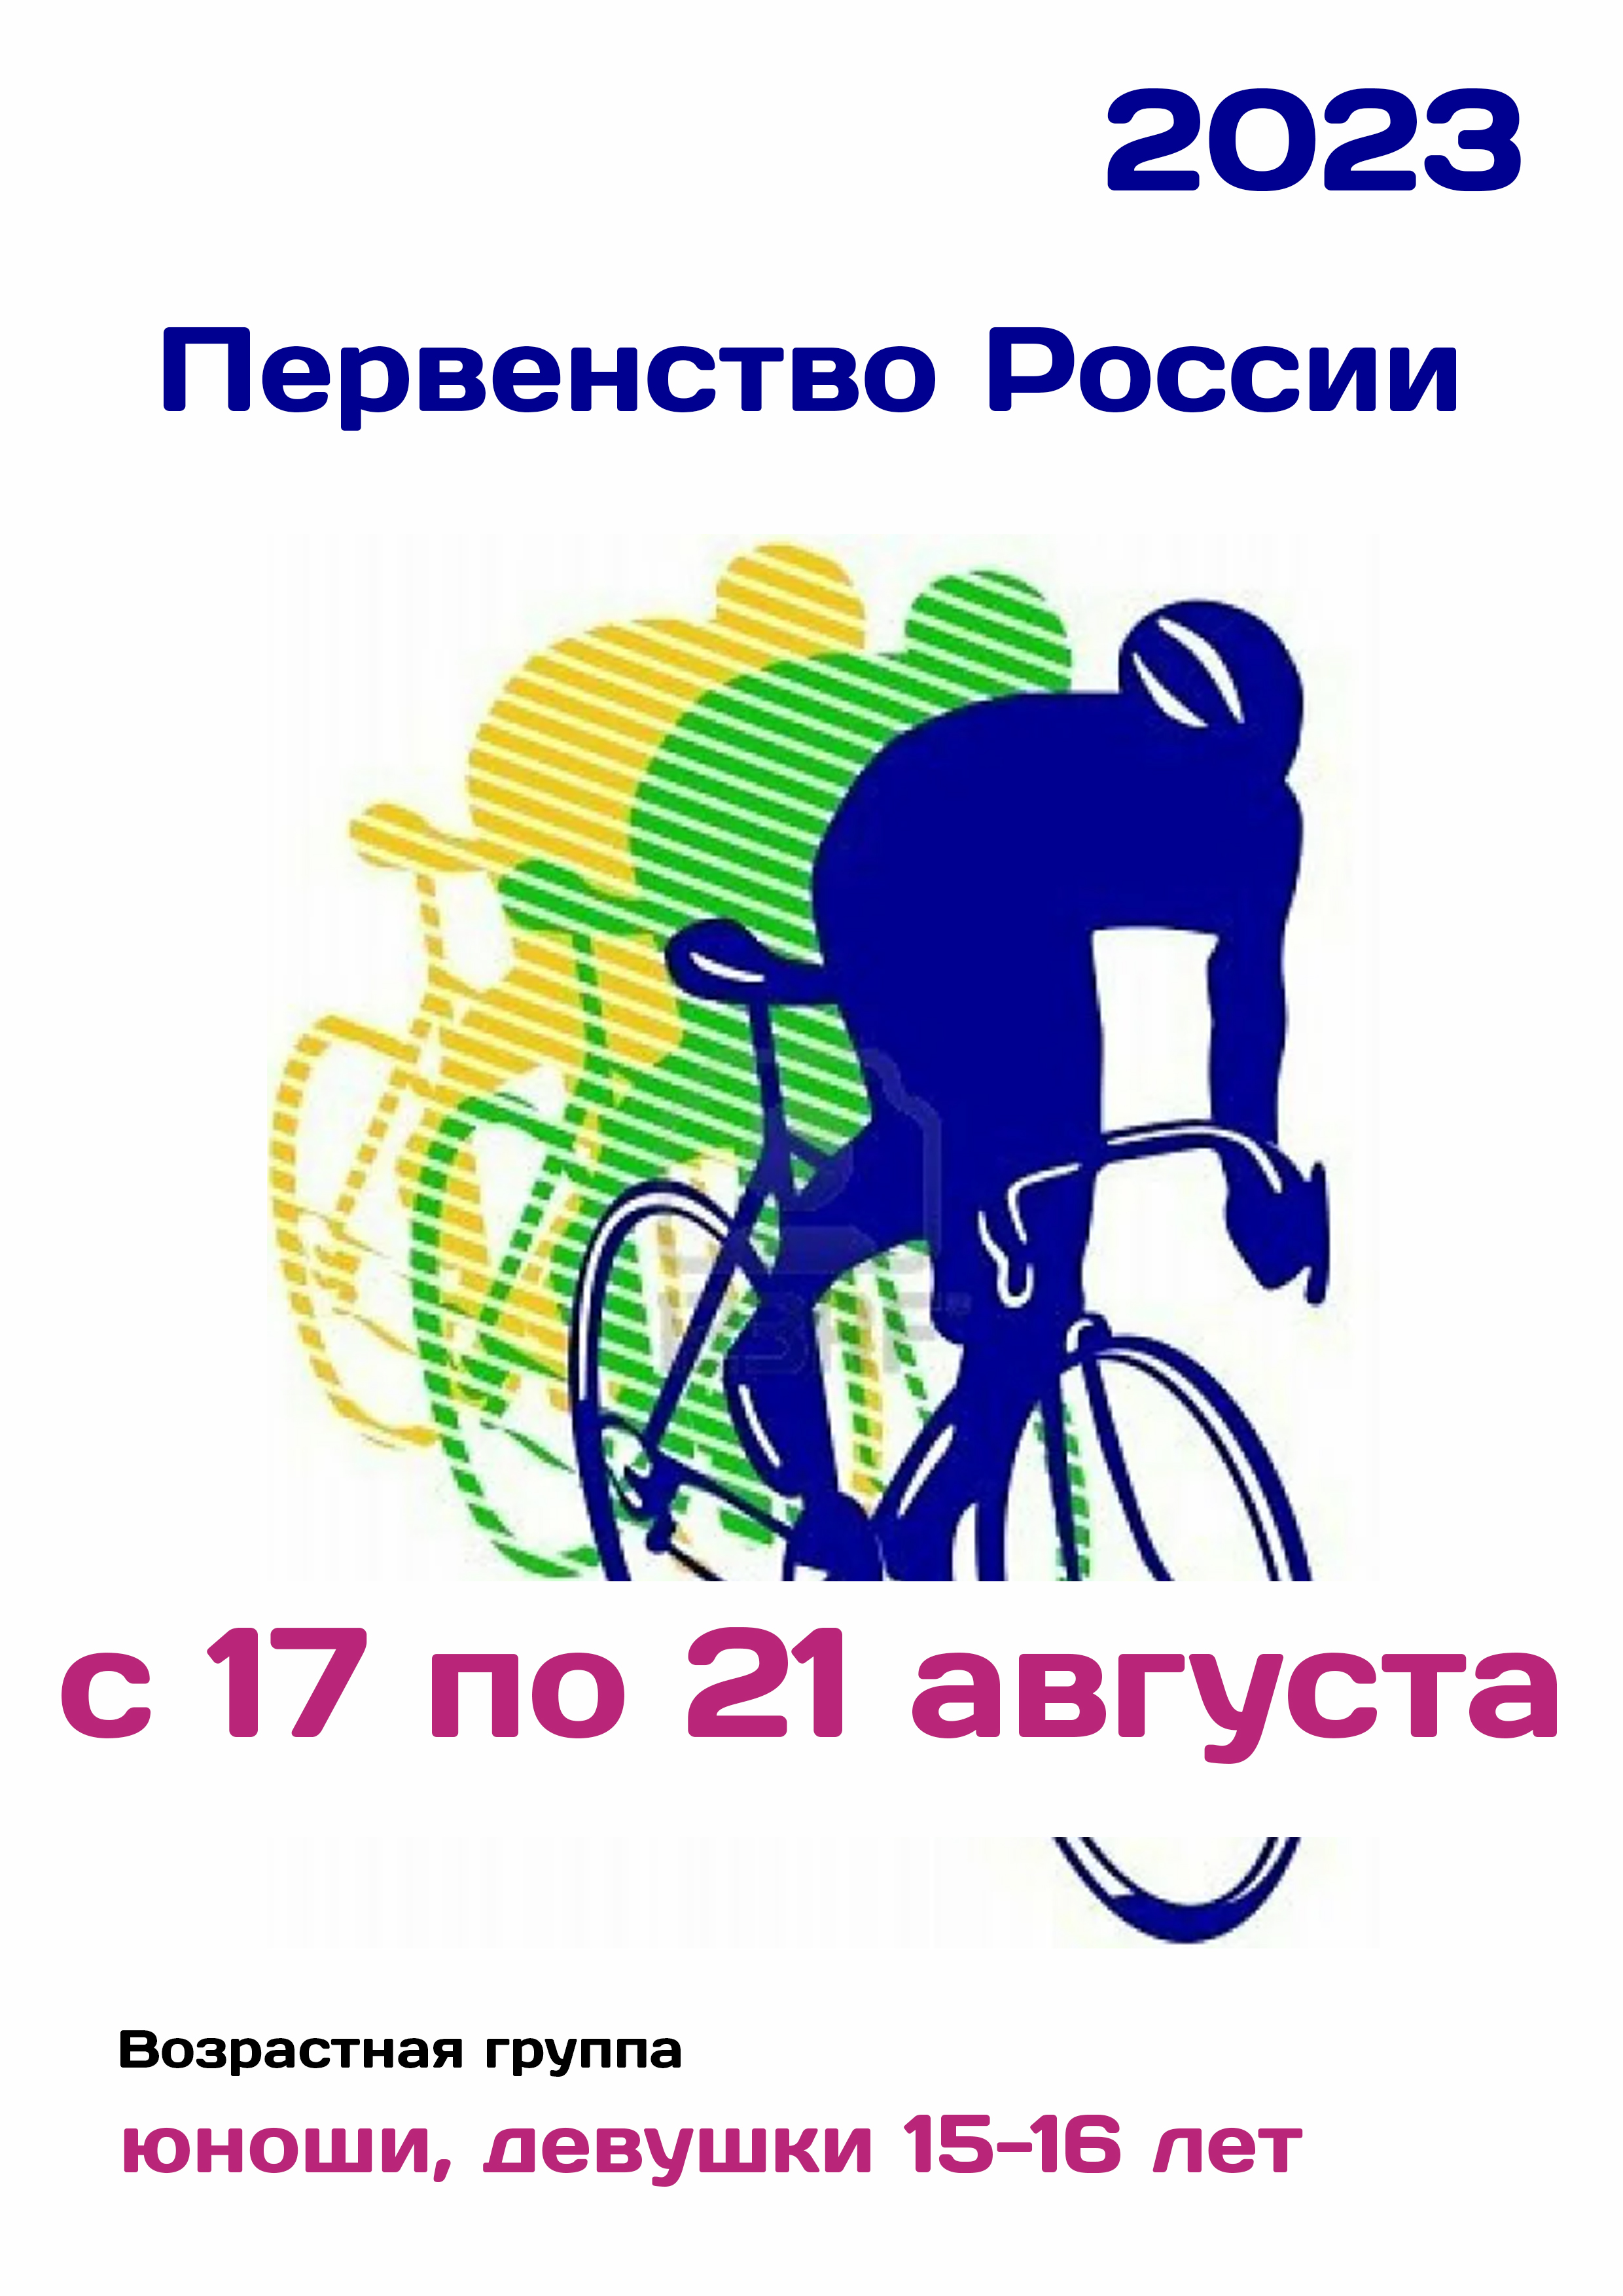 Первенство России по велоспорту 17  אוגוסט
 2023  שנה
 